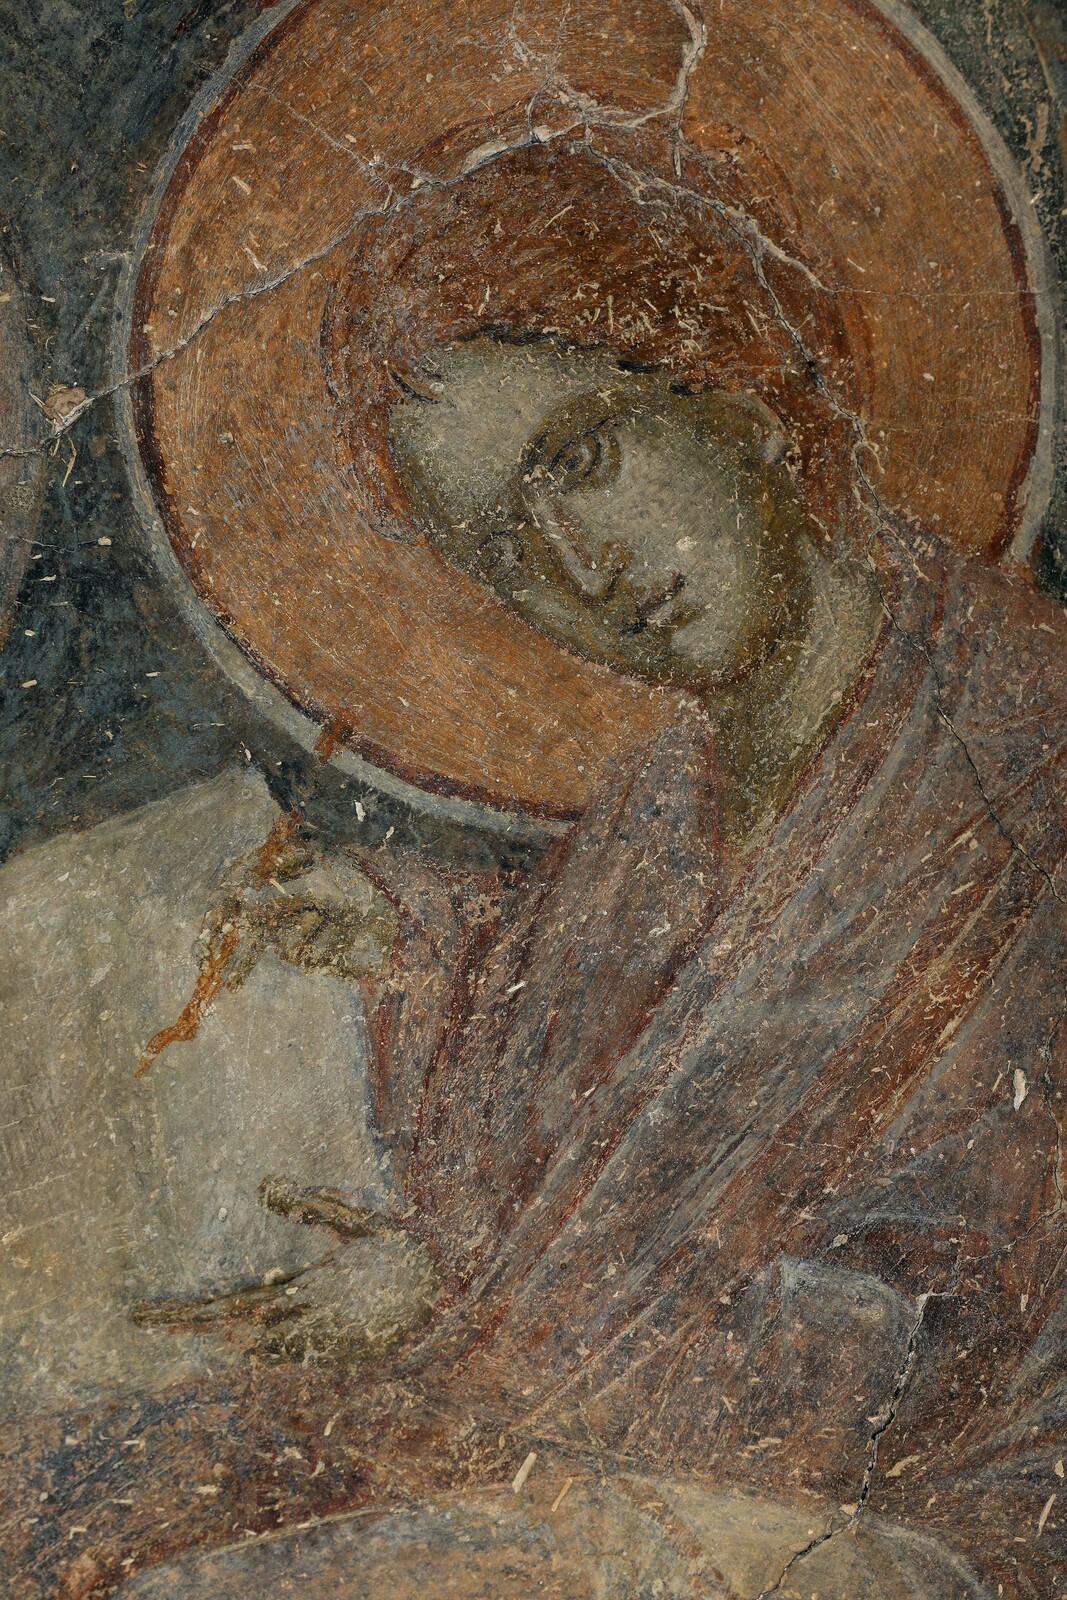 John the Evangelist with Prochorus, detail